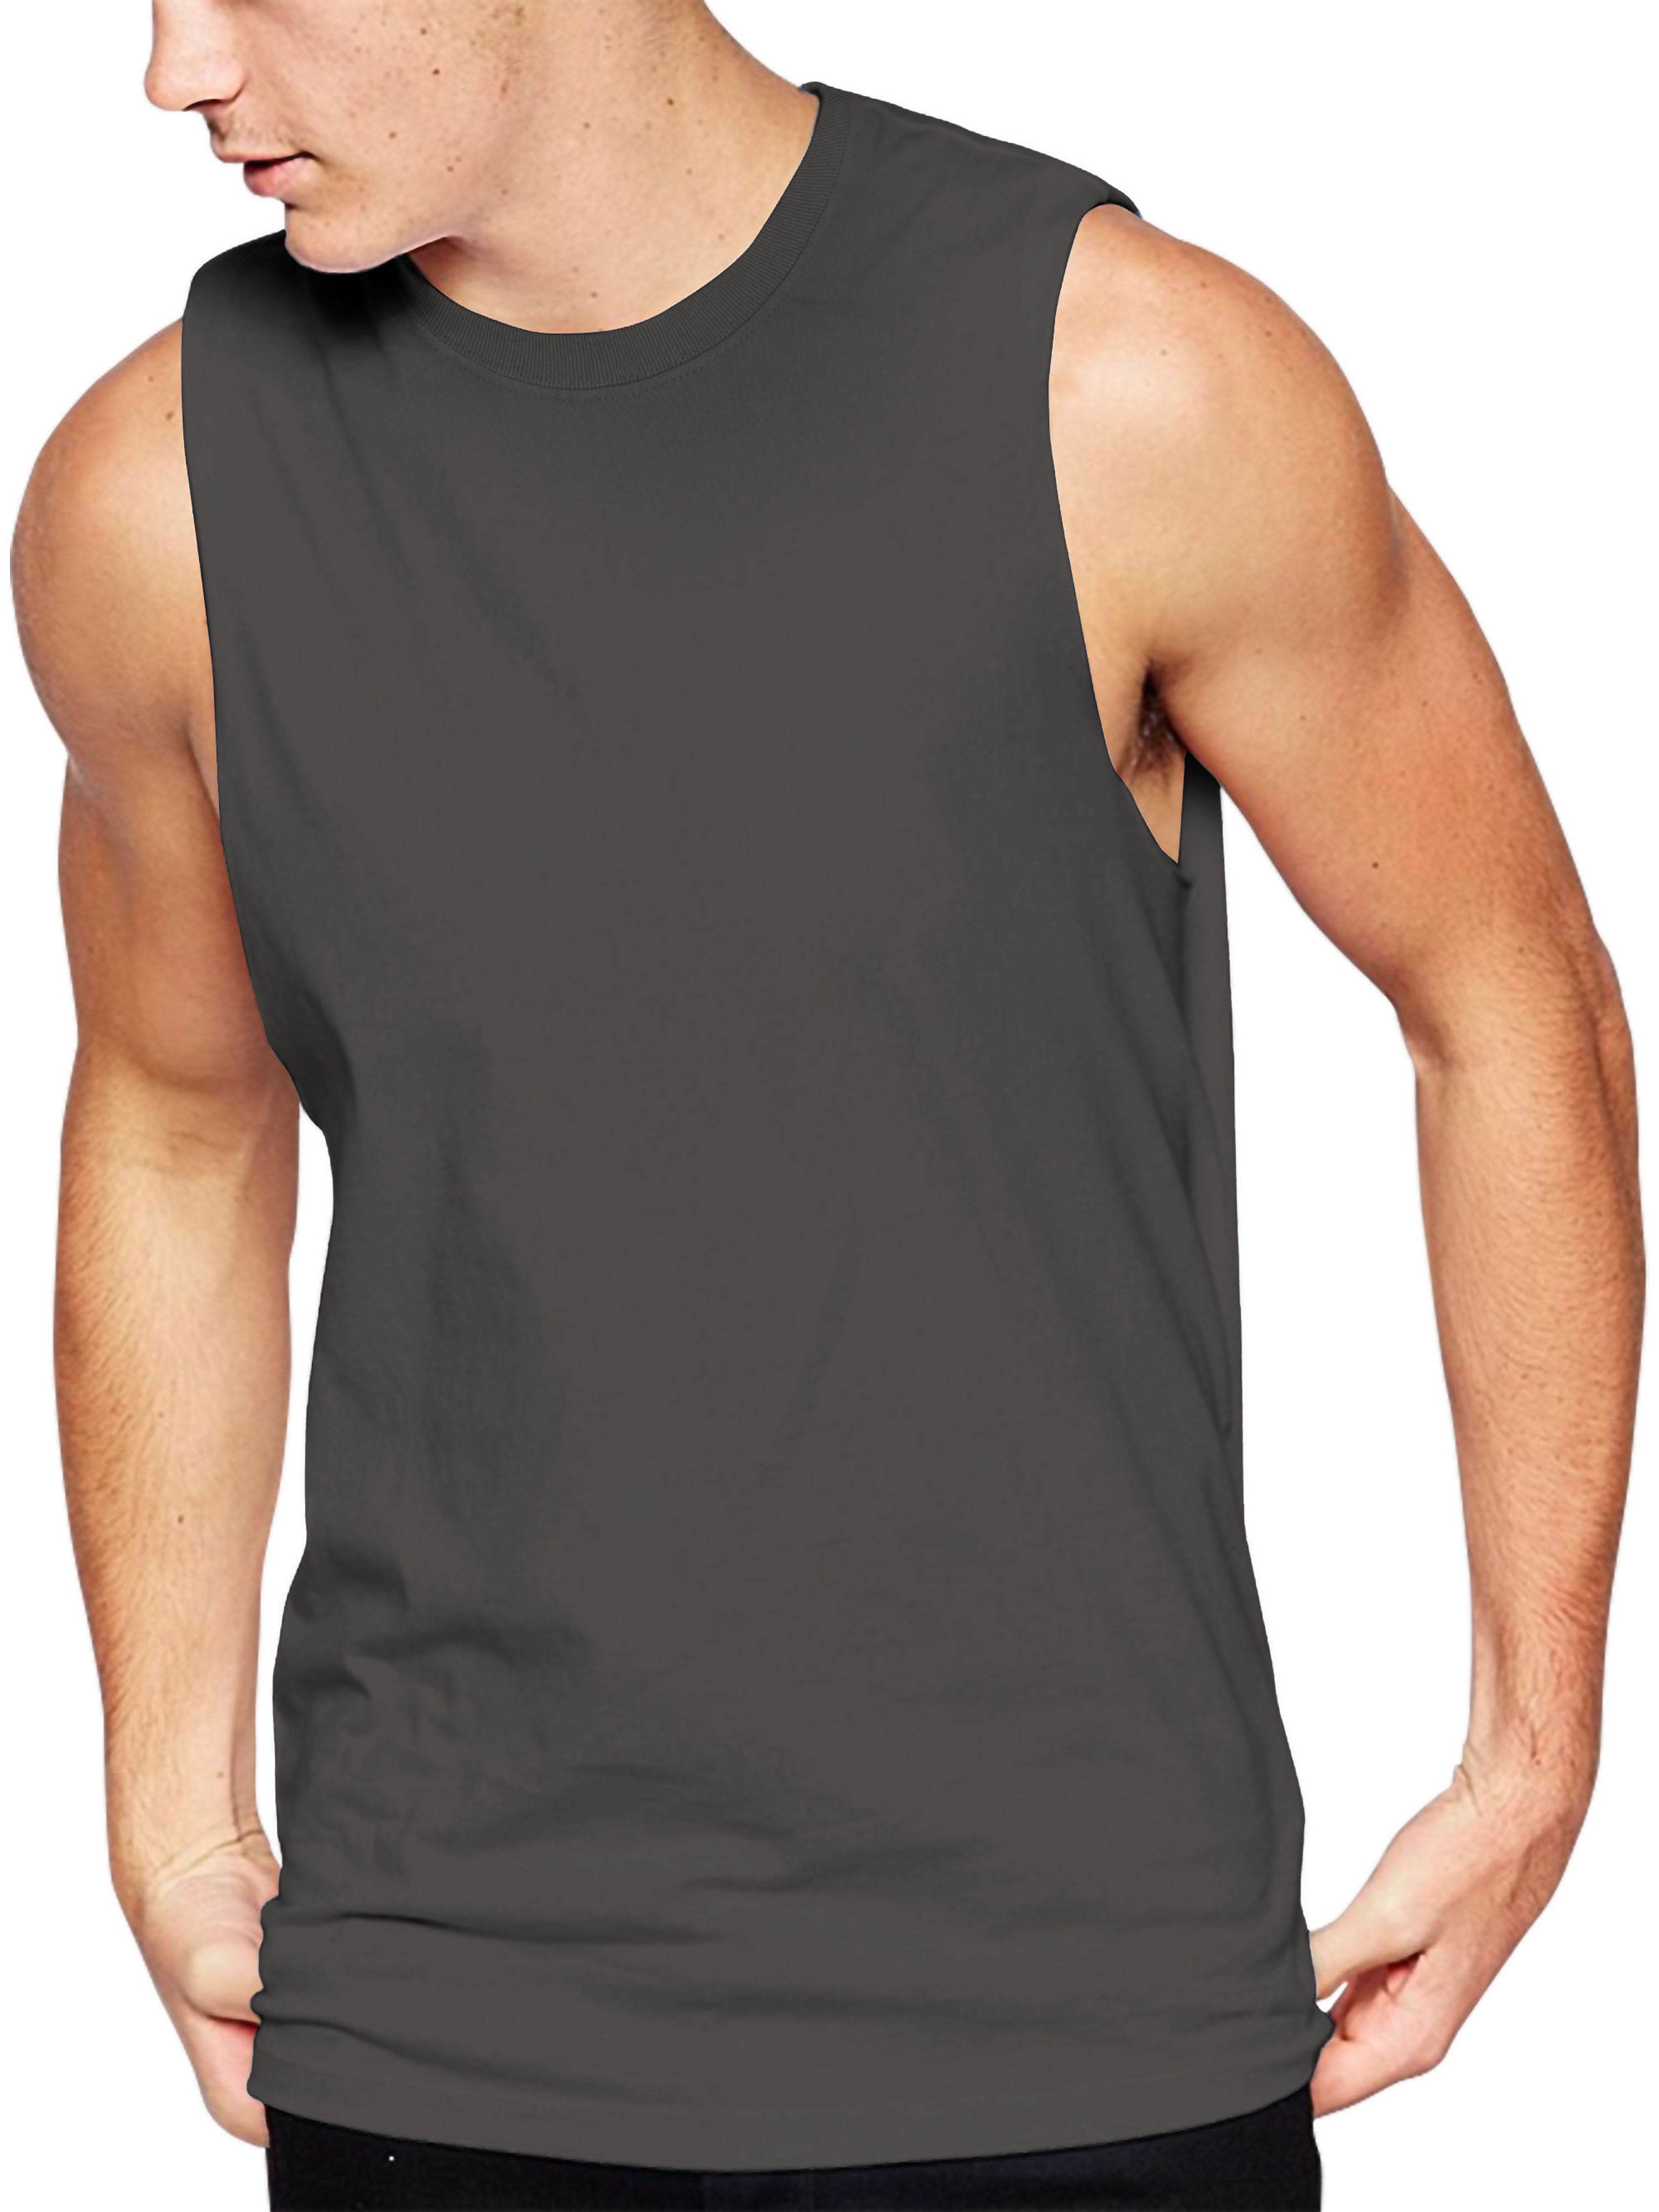 Ma Croix Men's Sleeveless Tee Shirts Muscle Gym Tank Top - Walmart.com